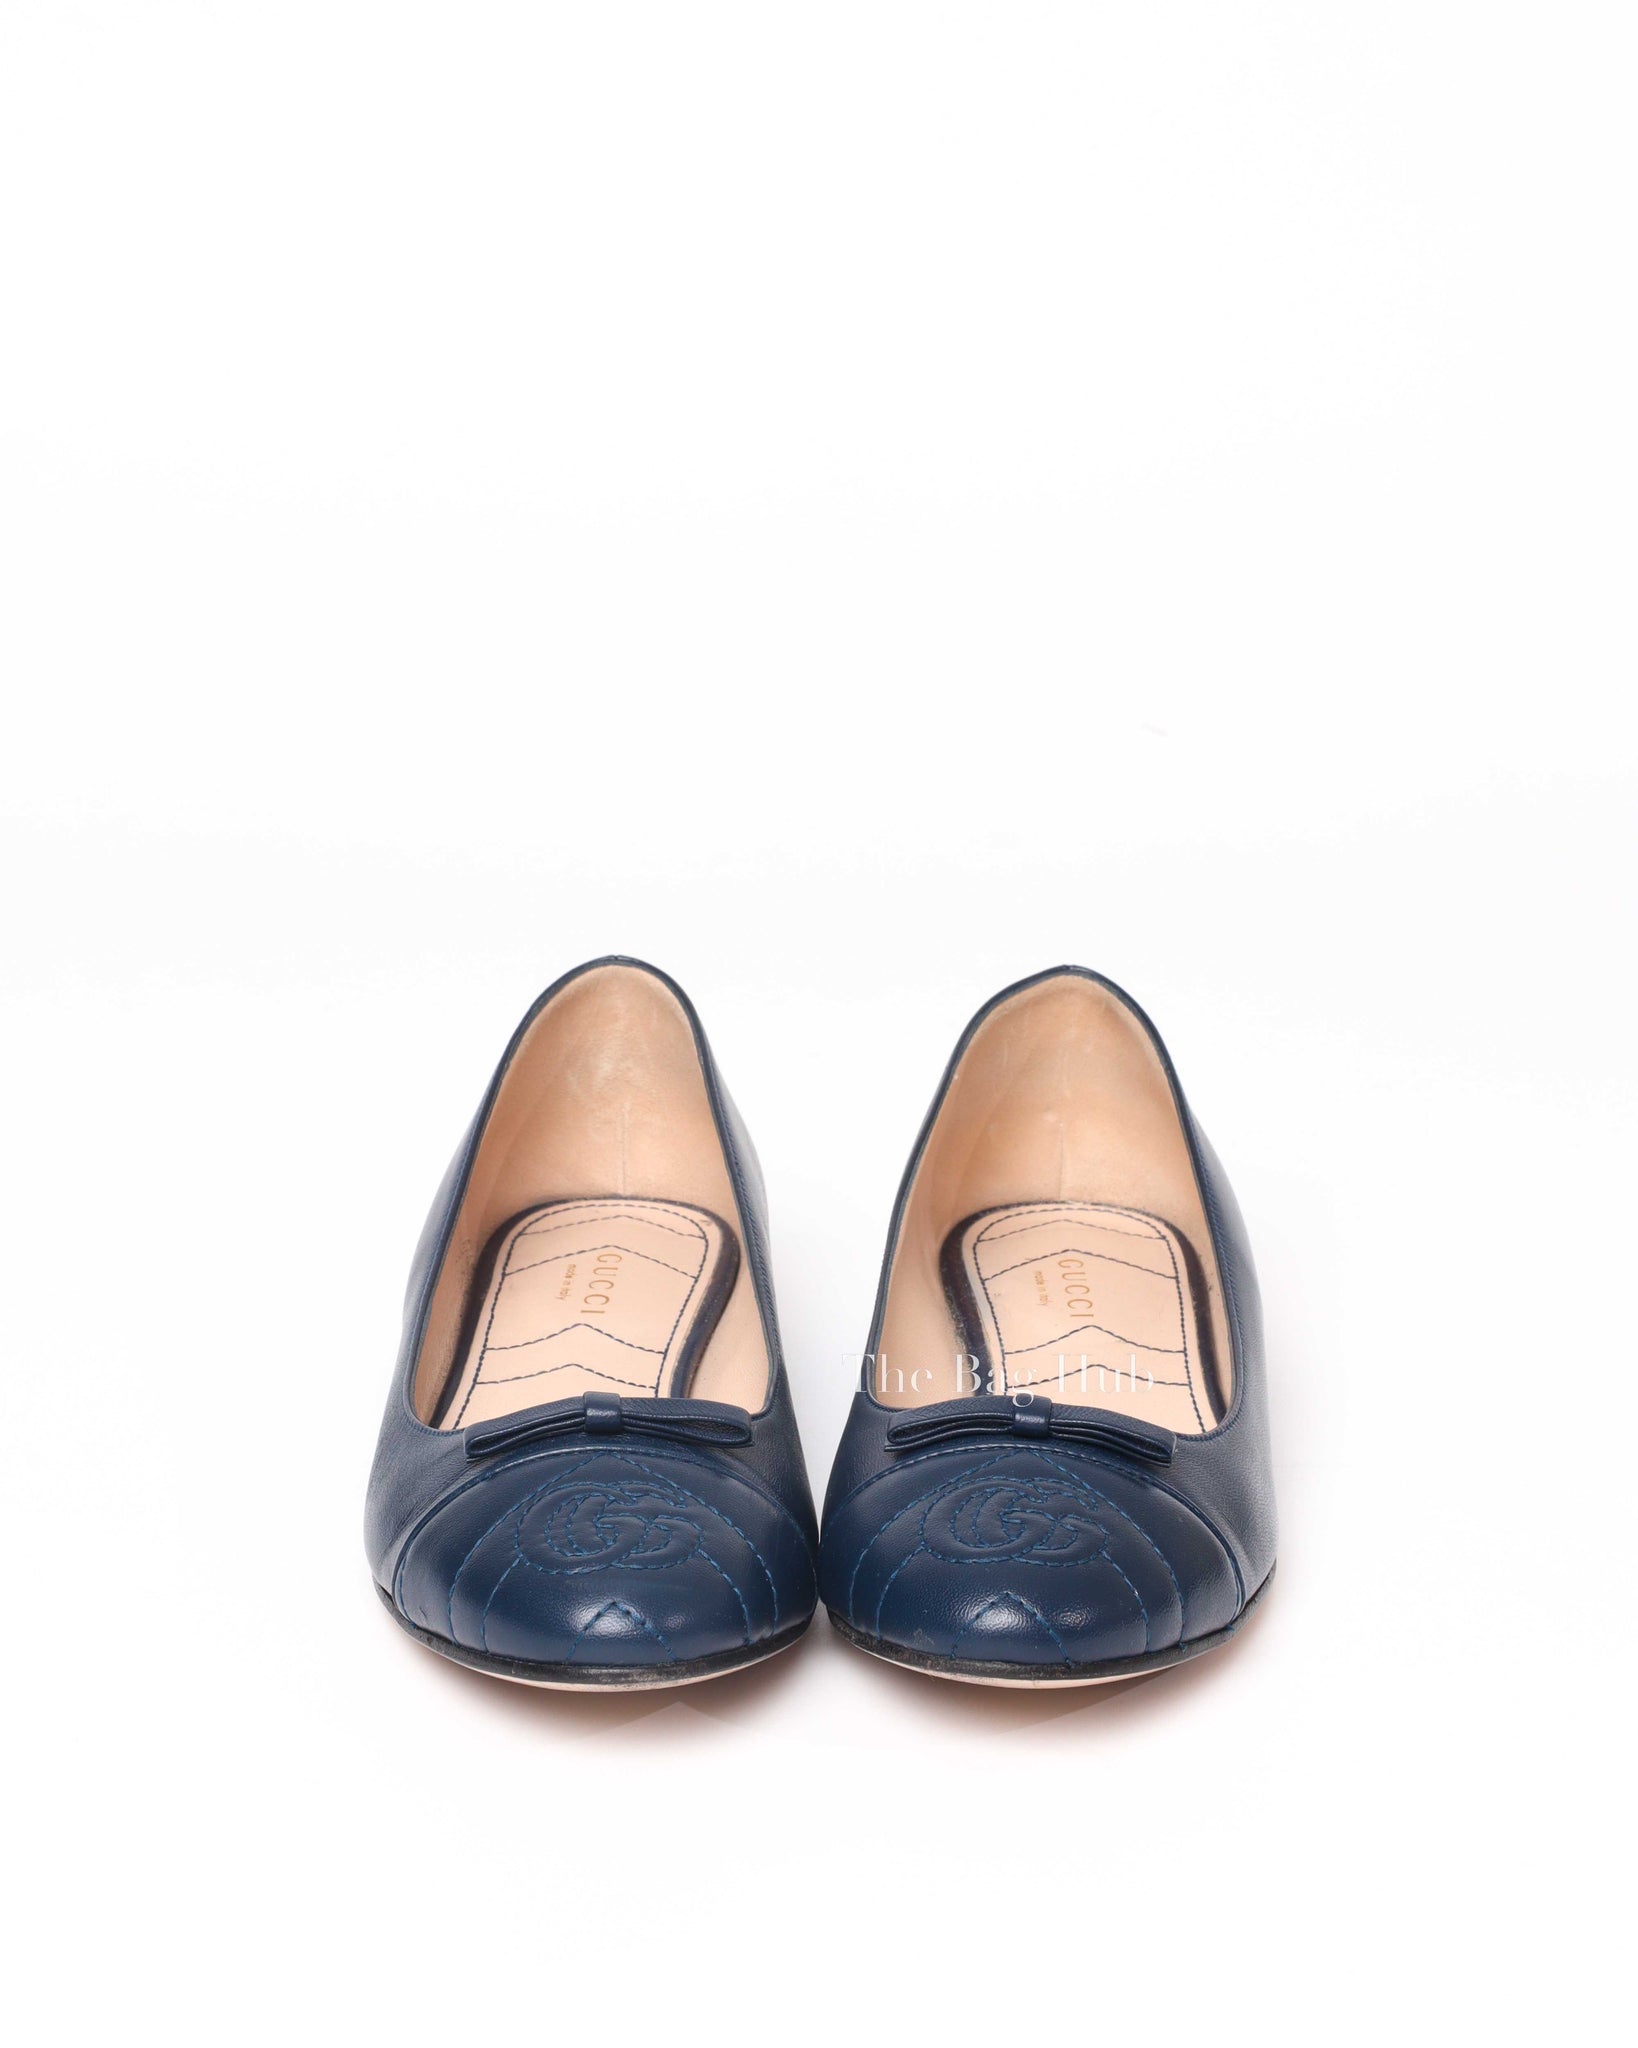 Gucci Blue Agata Nappa Leather Charlotte Ballet Flats Size 37.5-3